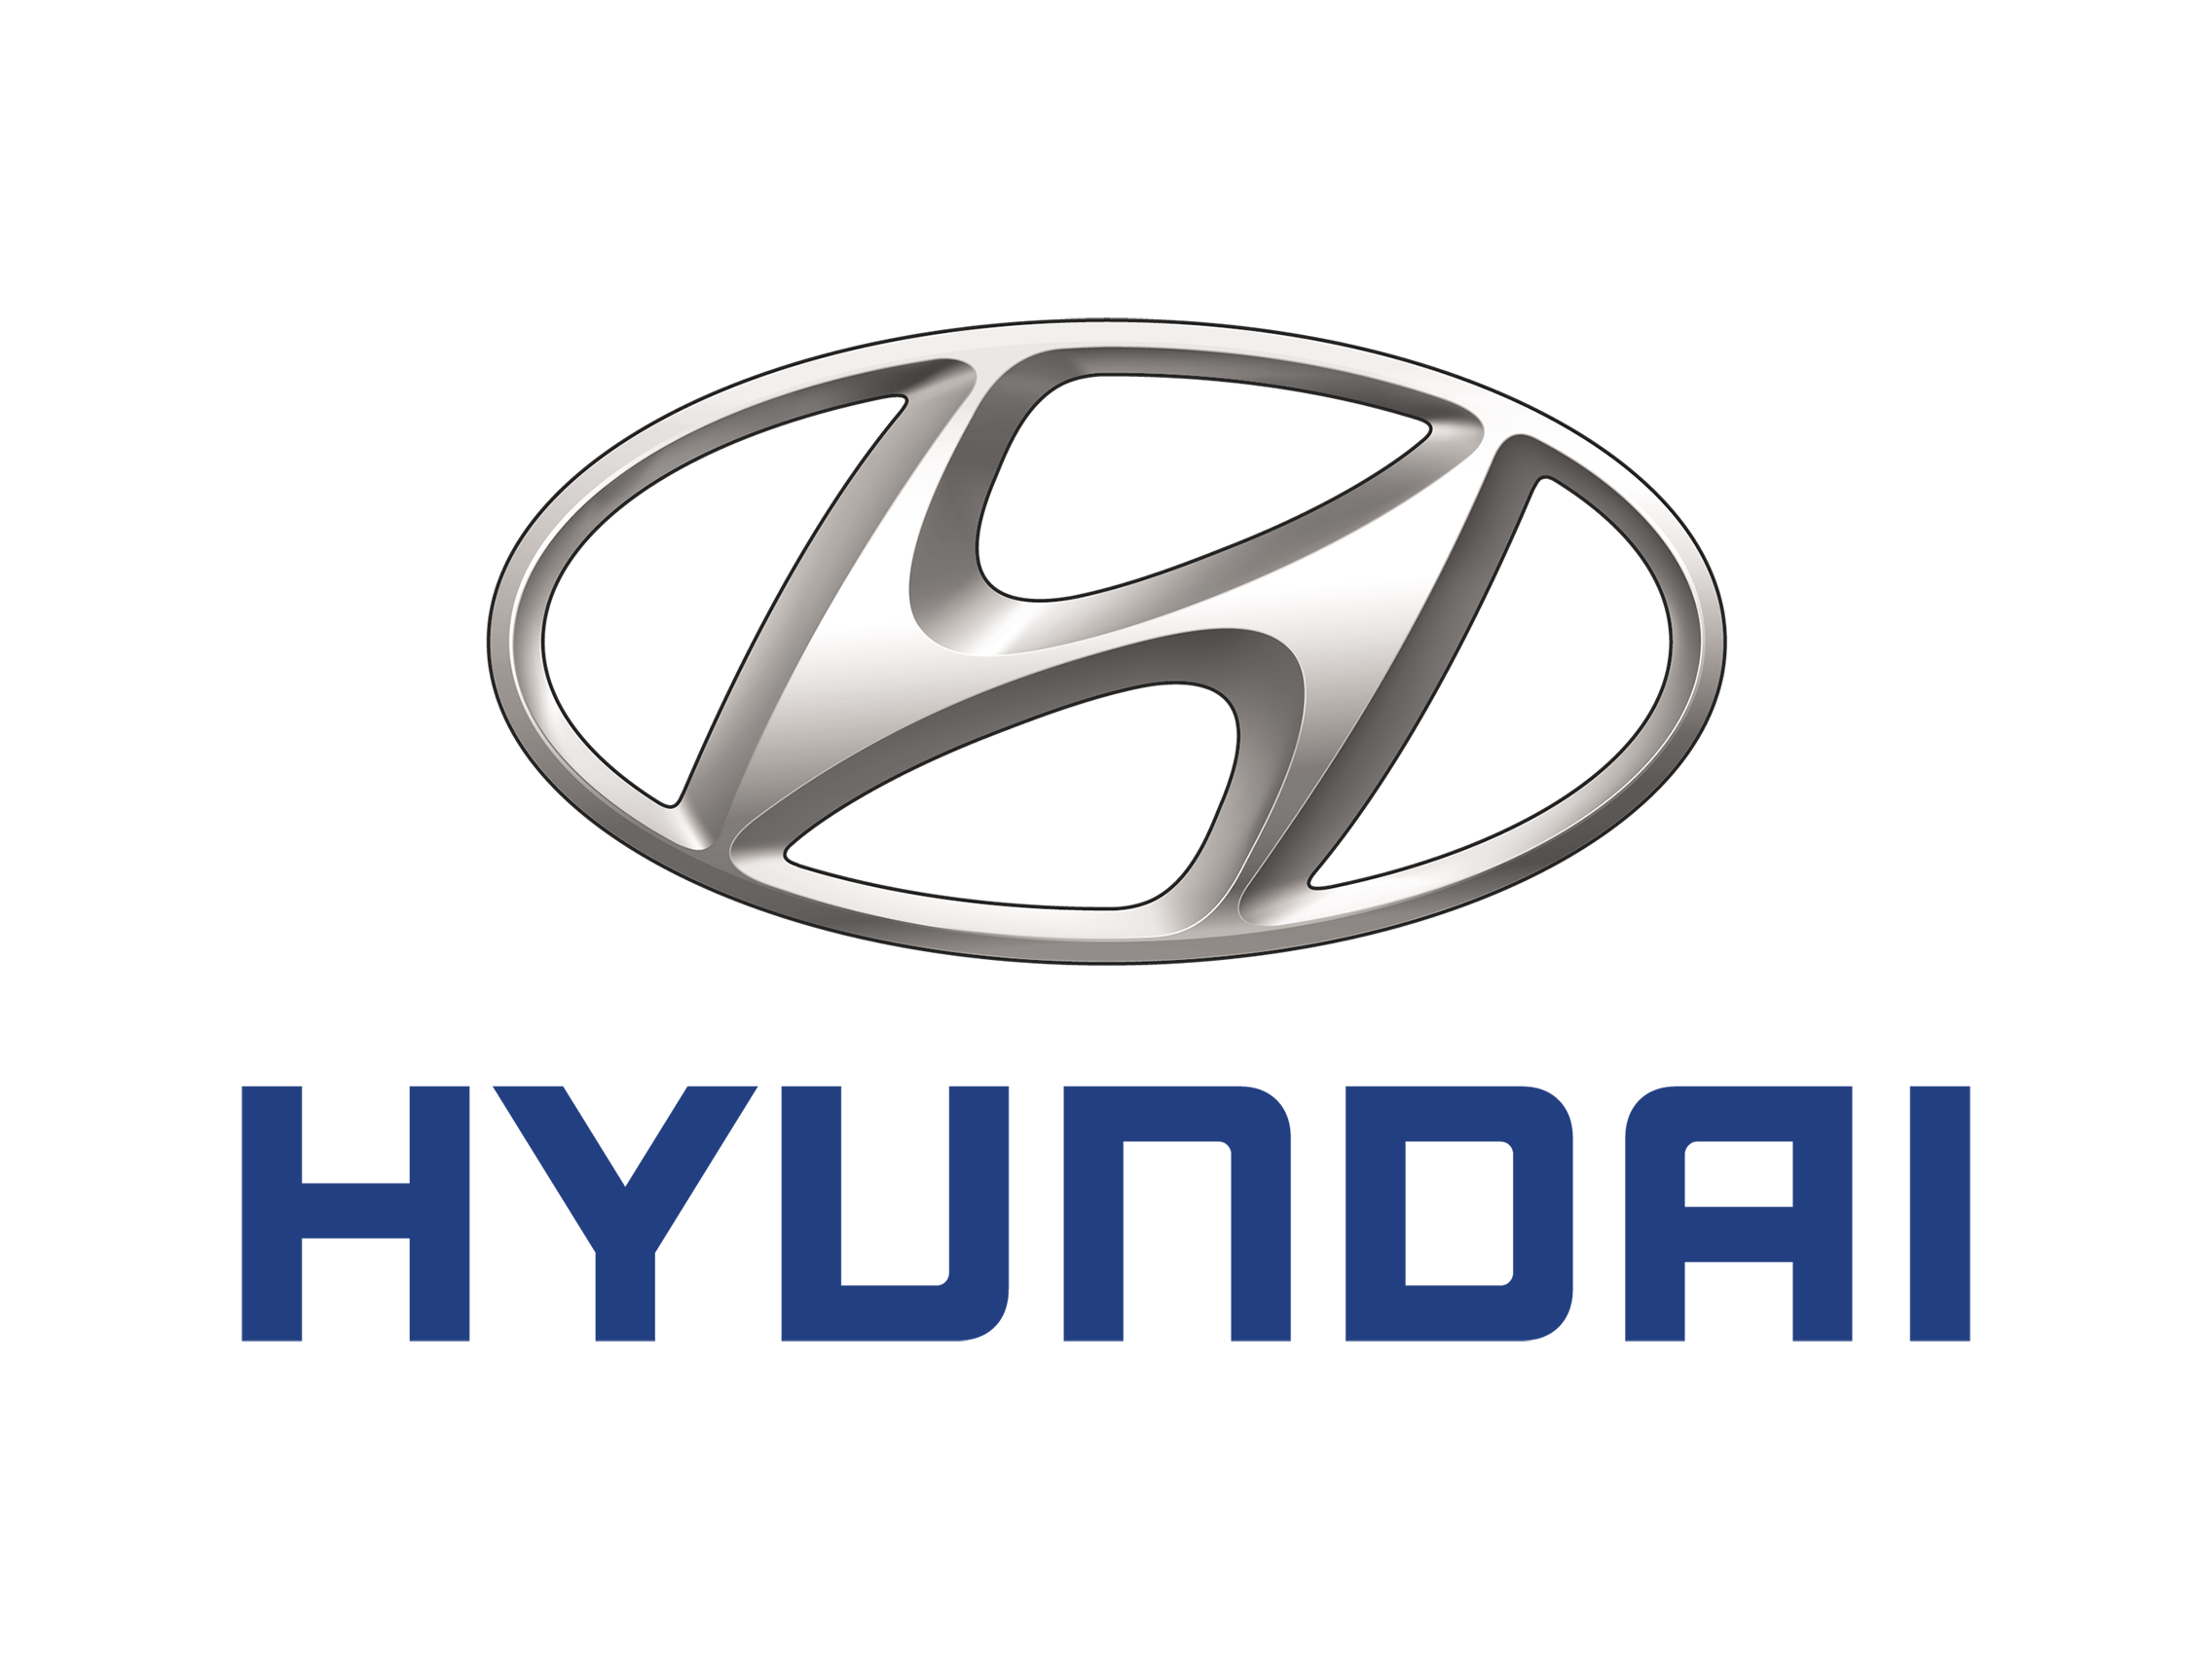 Old Hyundai Logo - Hyundai logo old